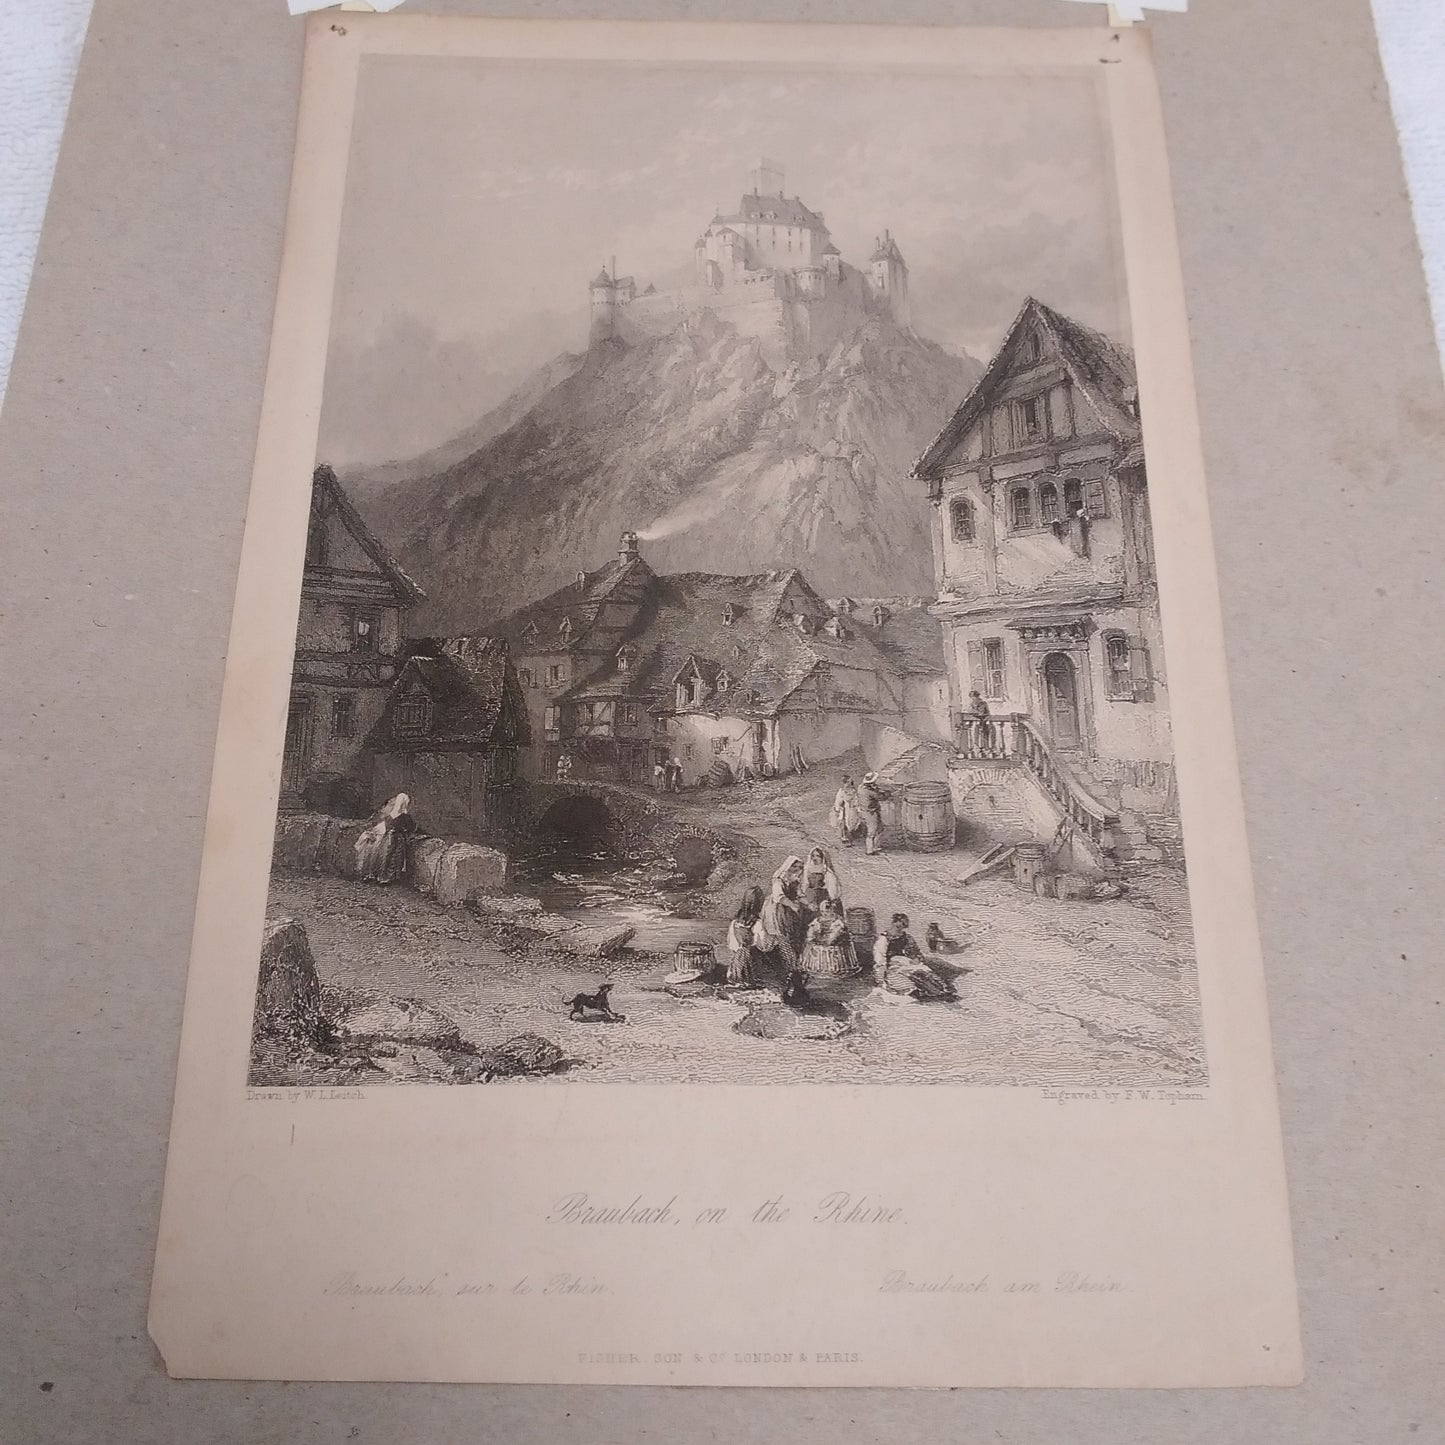 Vintage - Germany "Braubach on the Rhine" 1865 Art Print Engraving